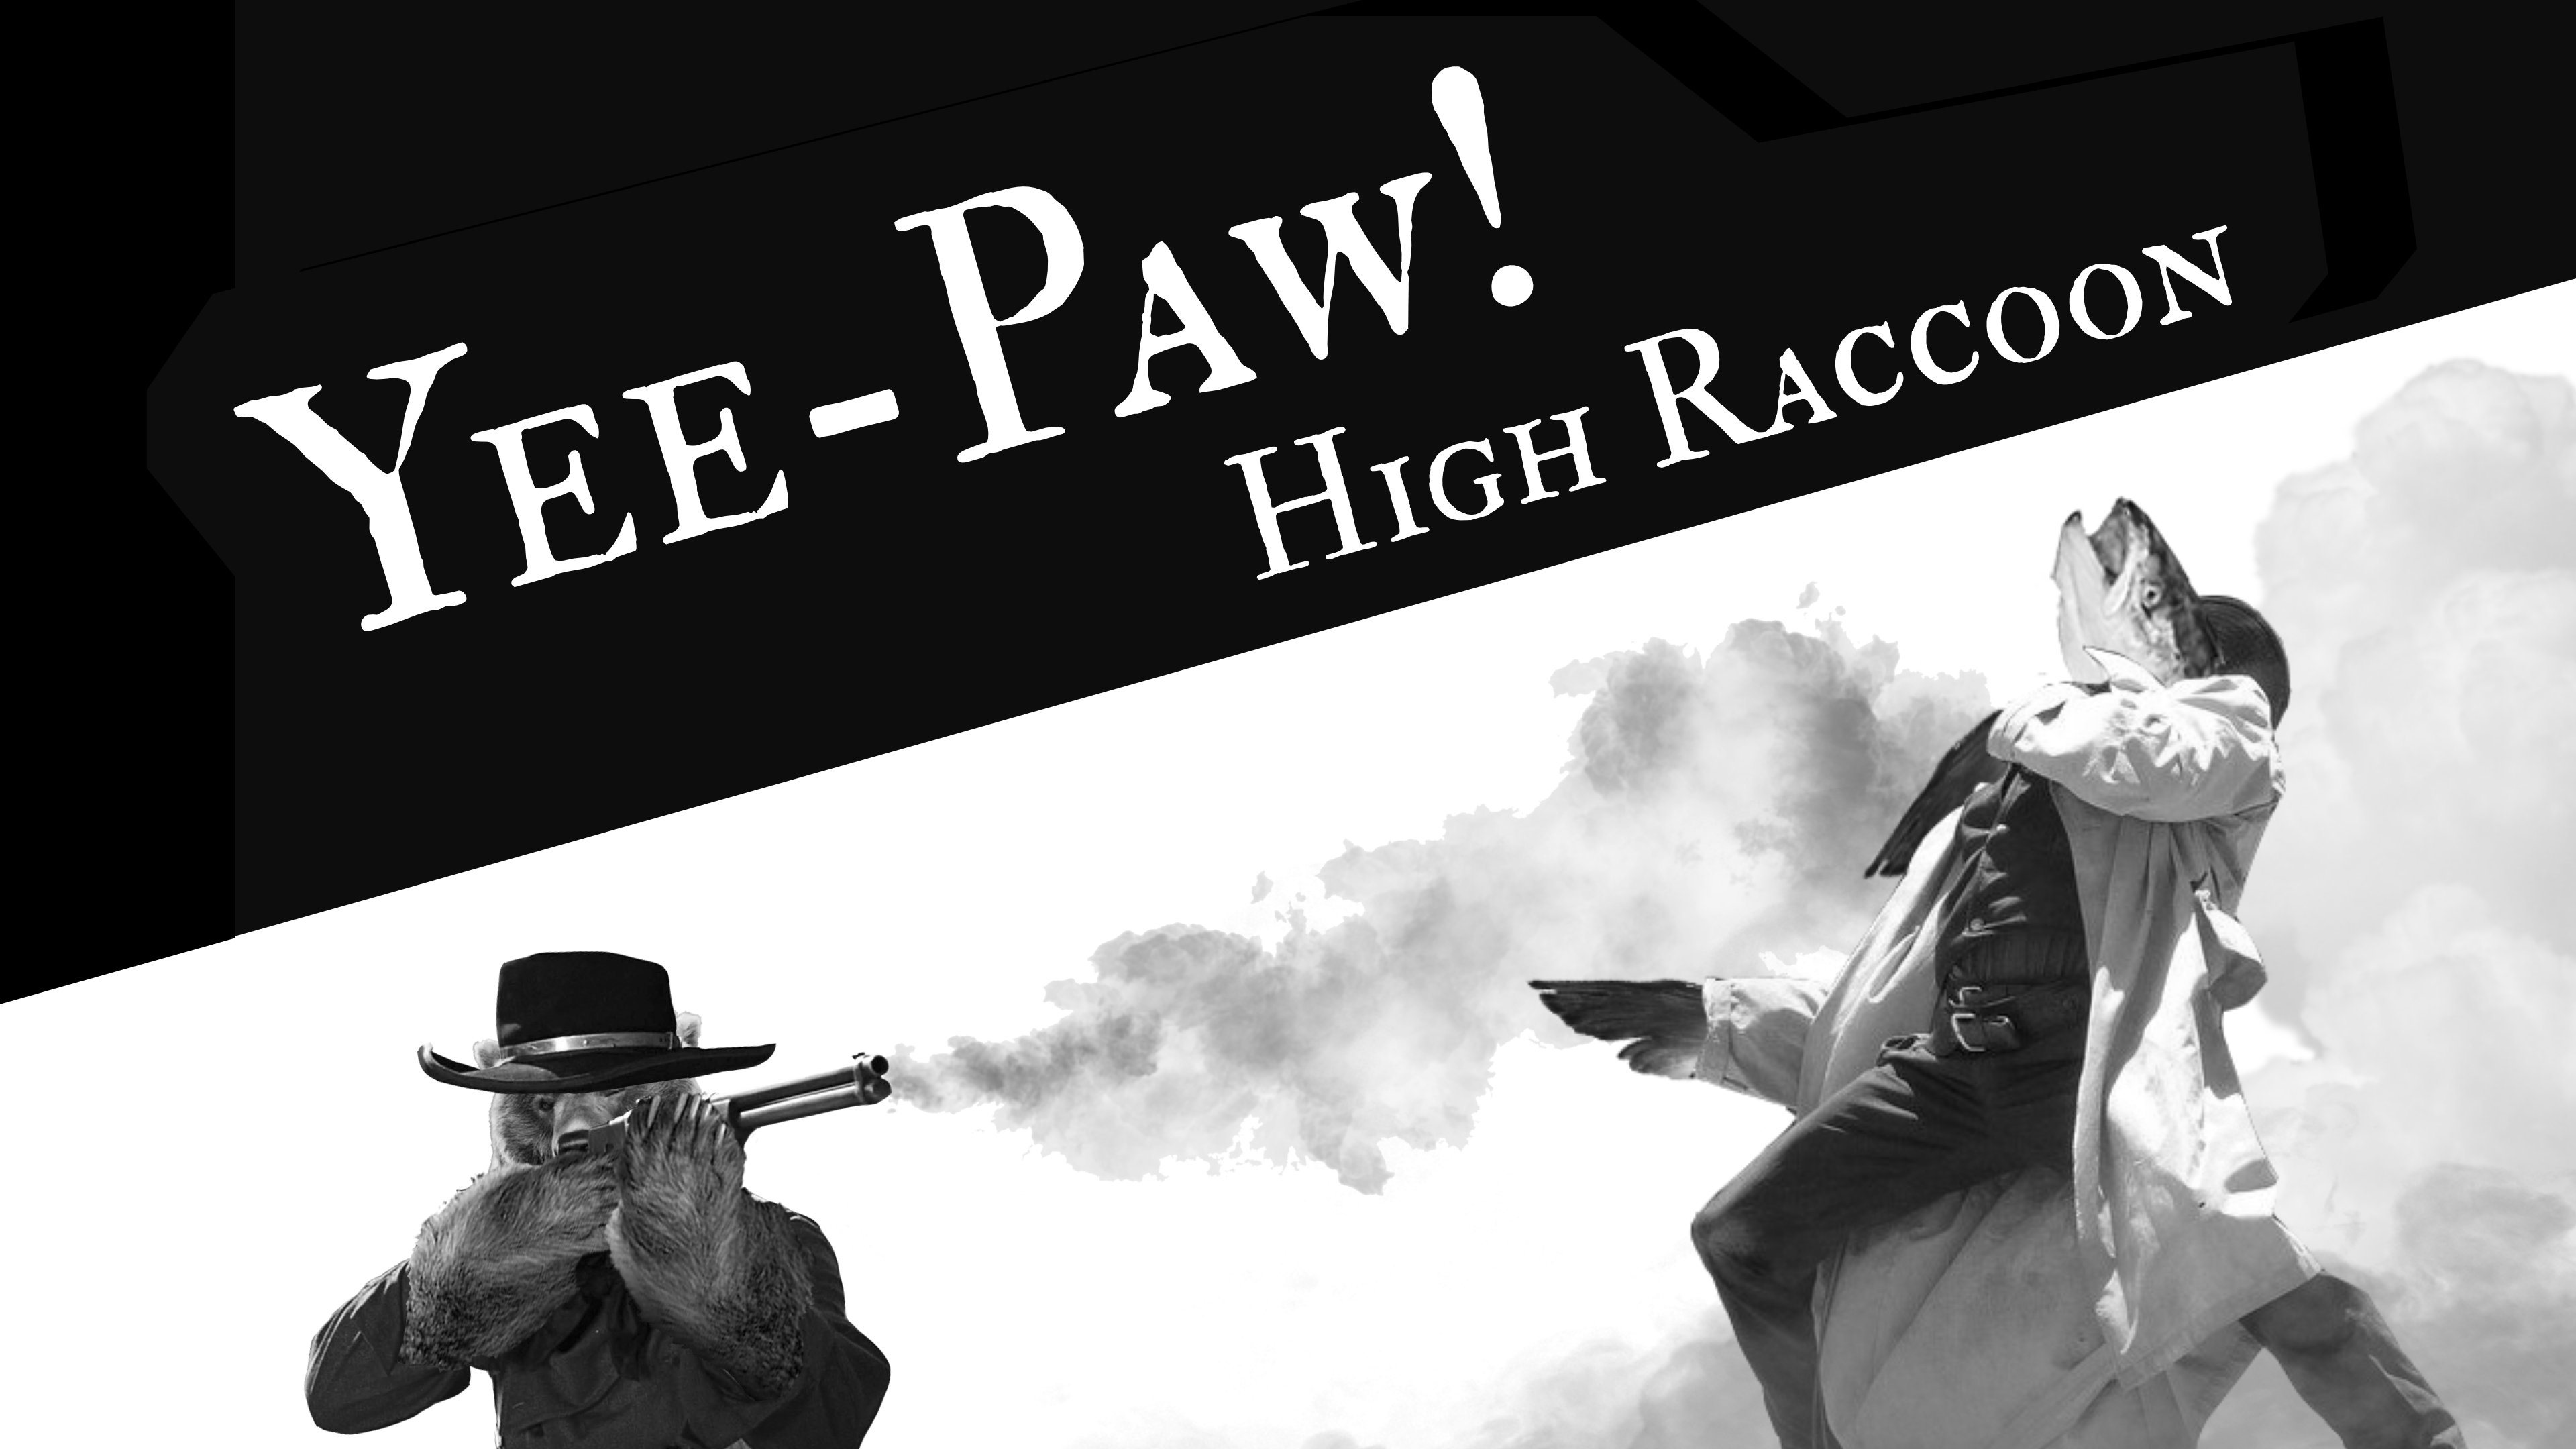 Yee-Paw: High Raccoon